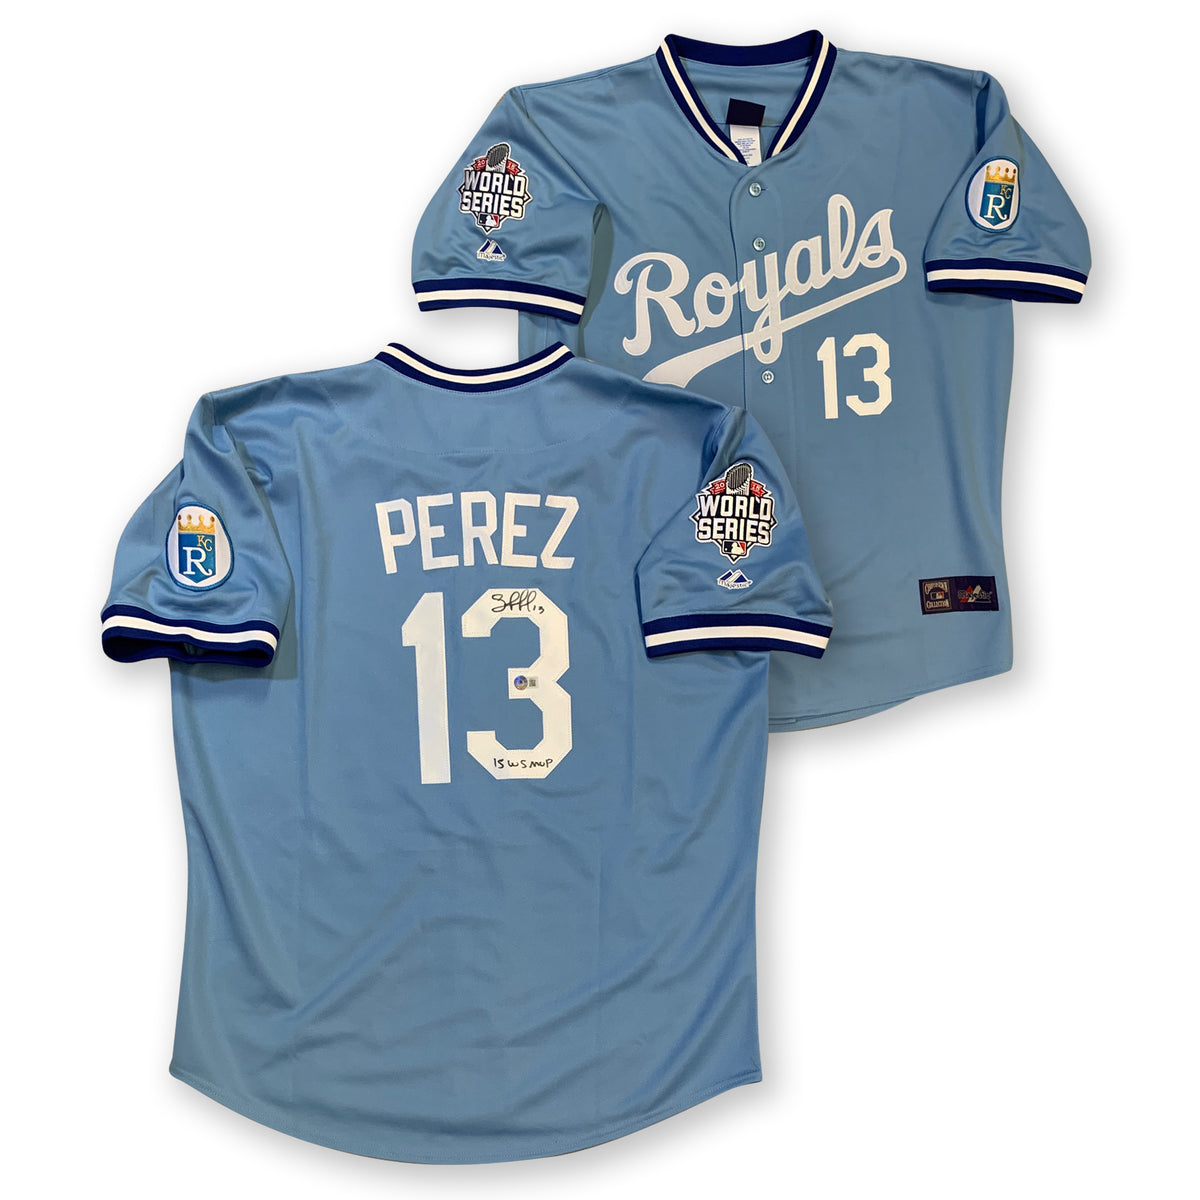 Salvador Perez of Kansas City Royals named World Series MVP - ESPN